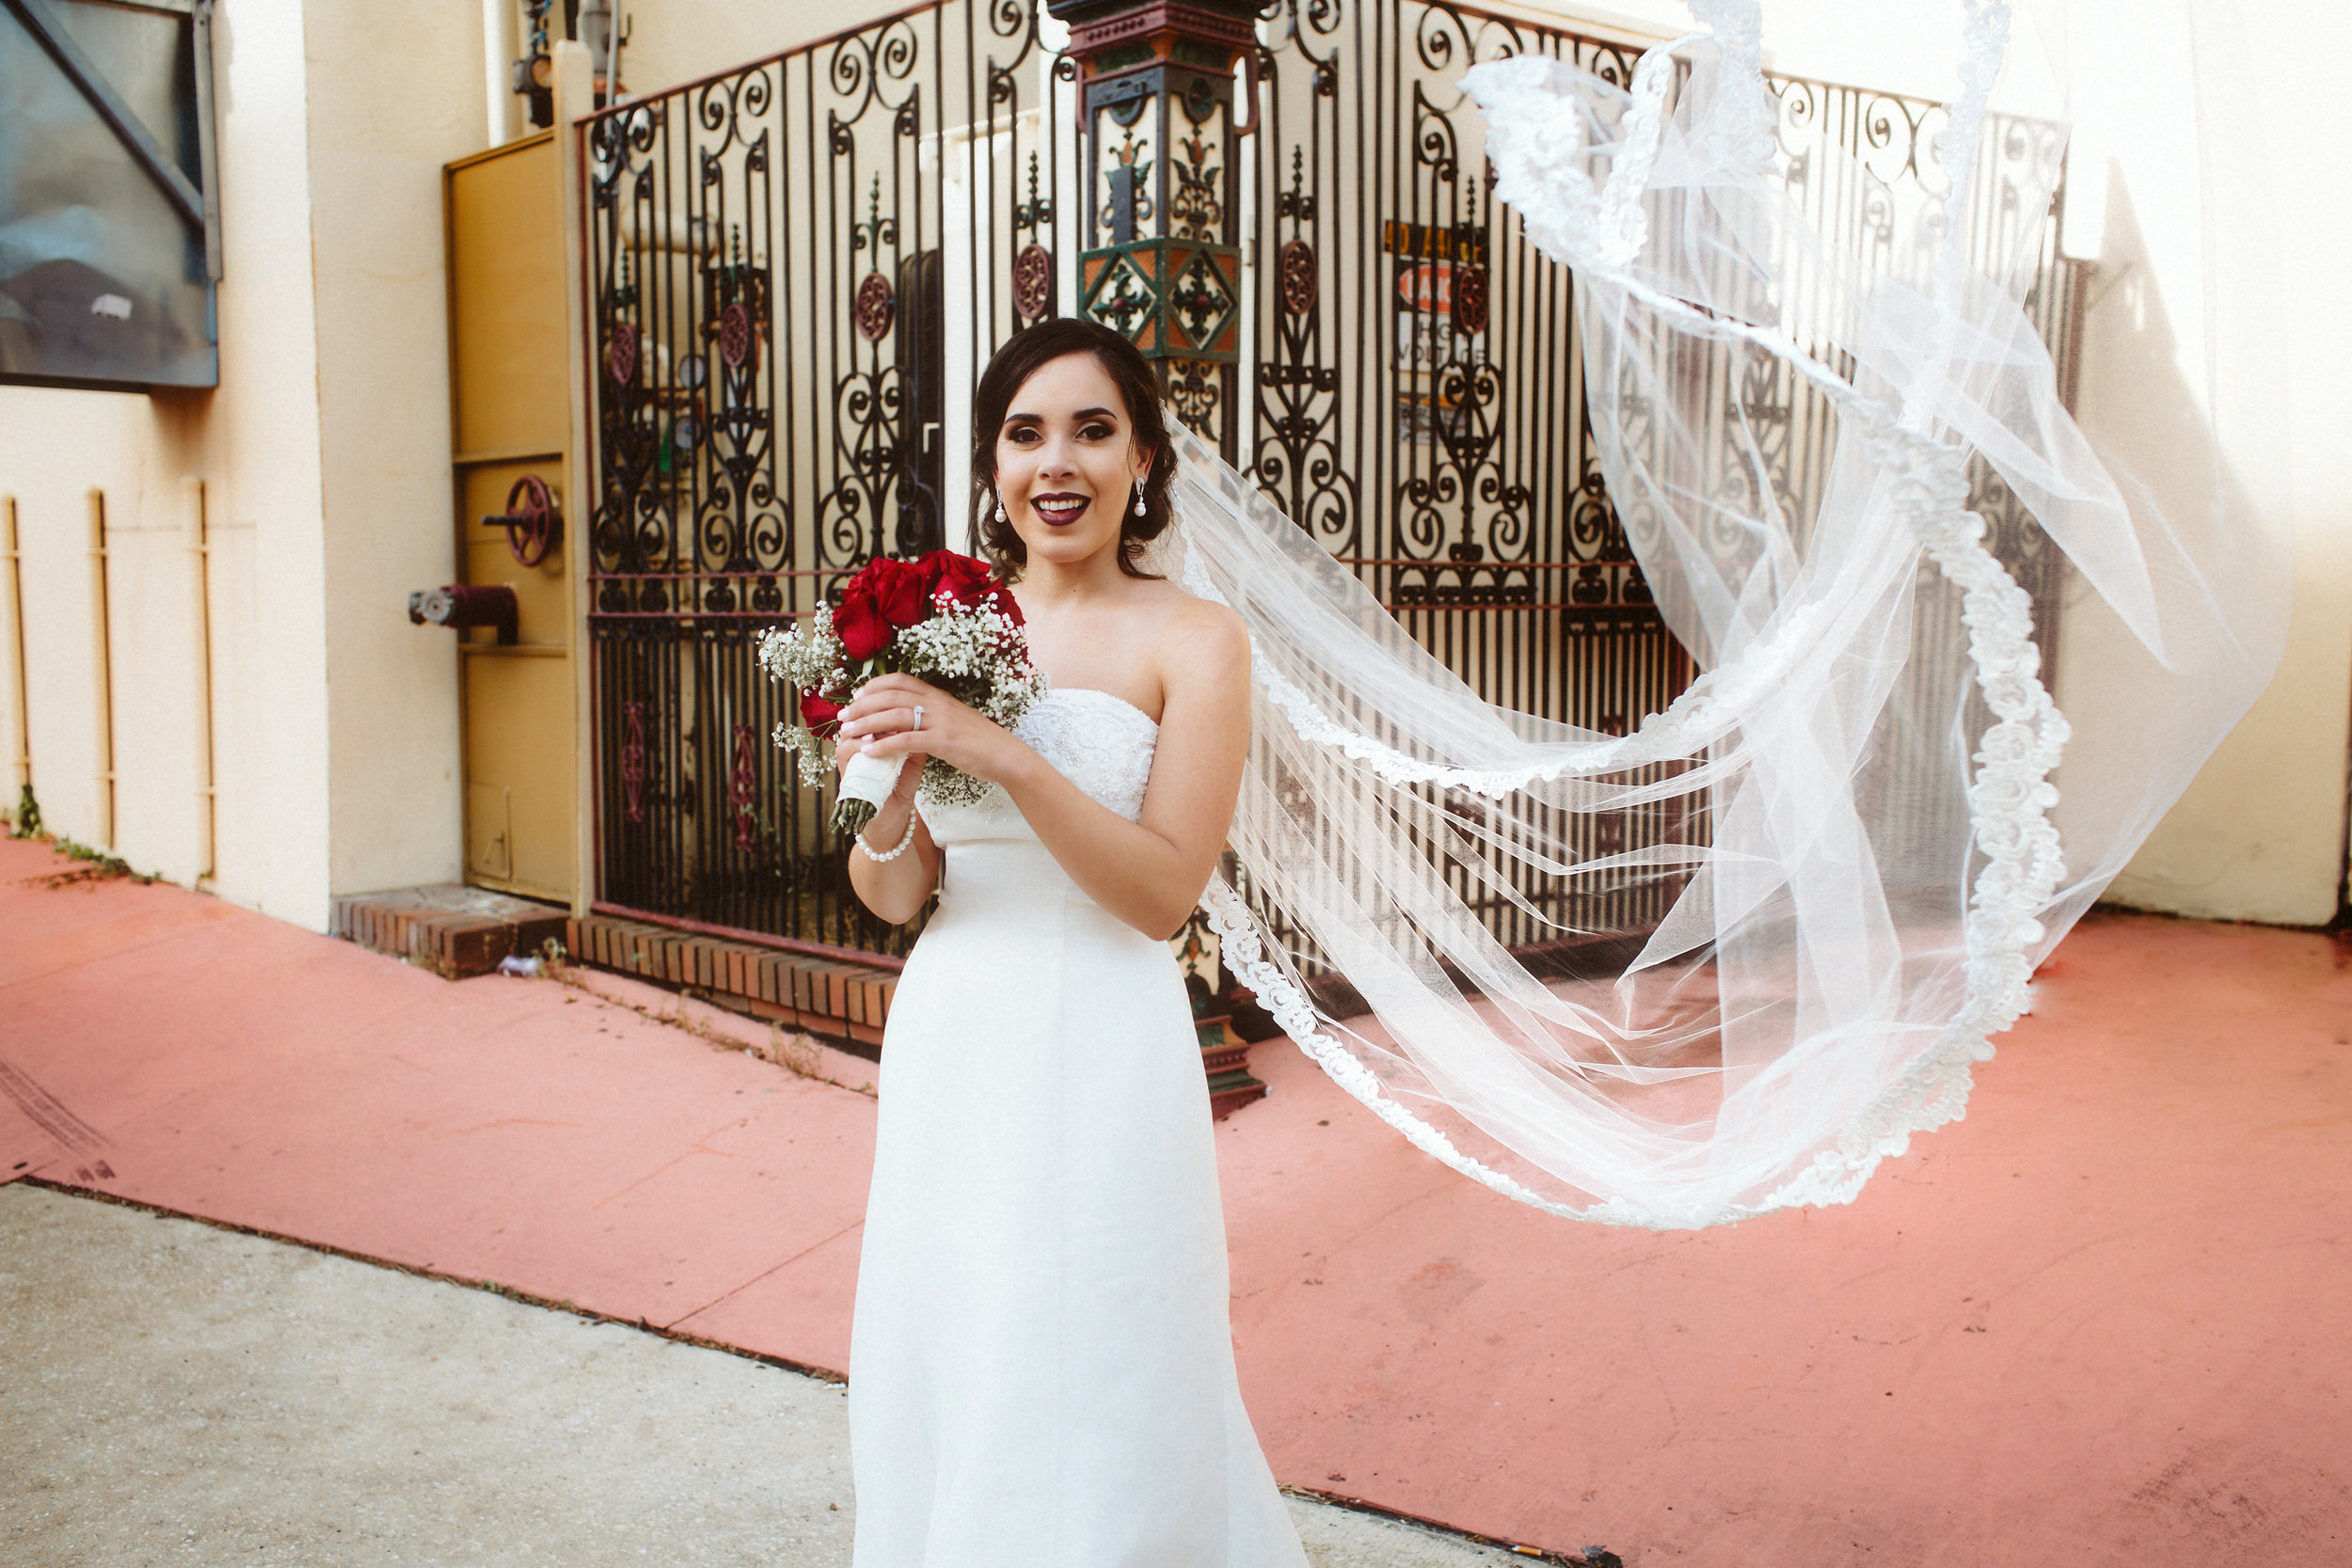 Ceviche Orlando | Wedding Photography | Vanessa Boy | vanessaboy.com |-297.com |final.jpg